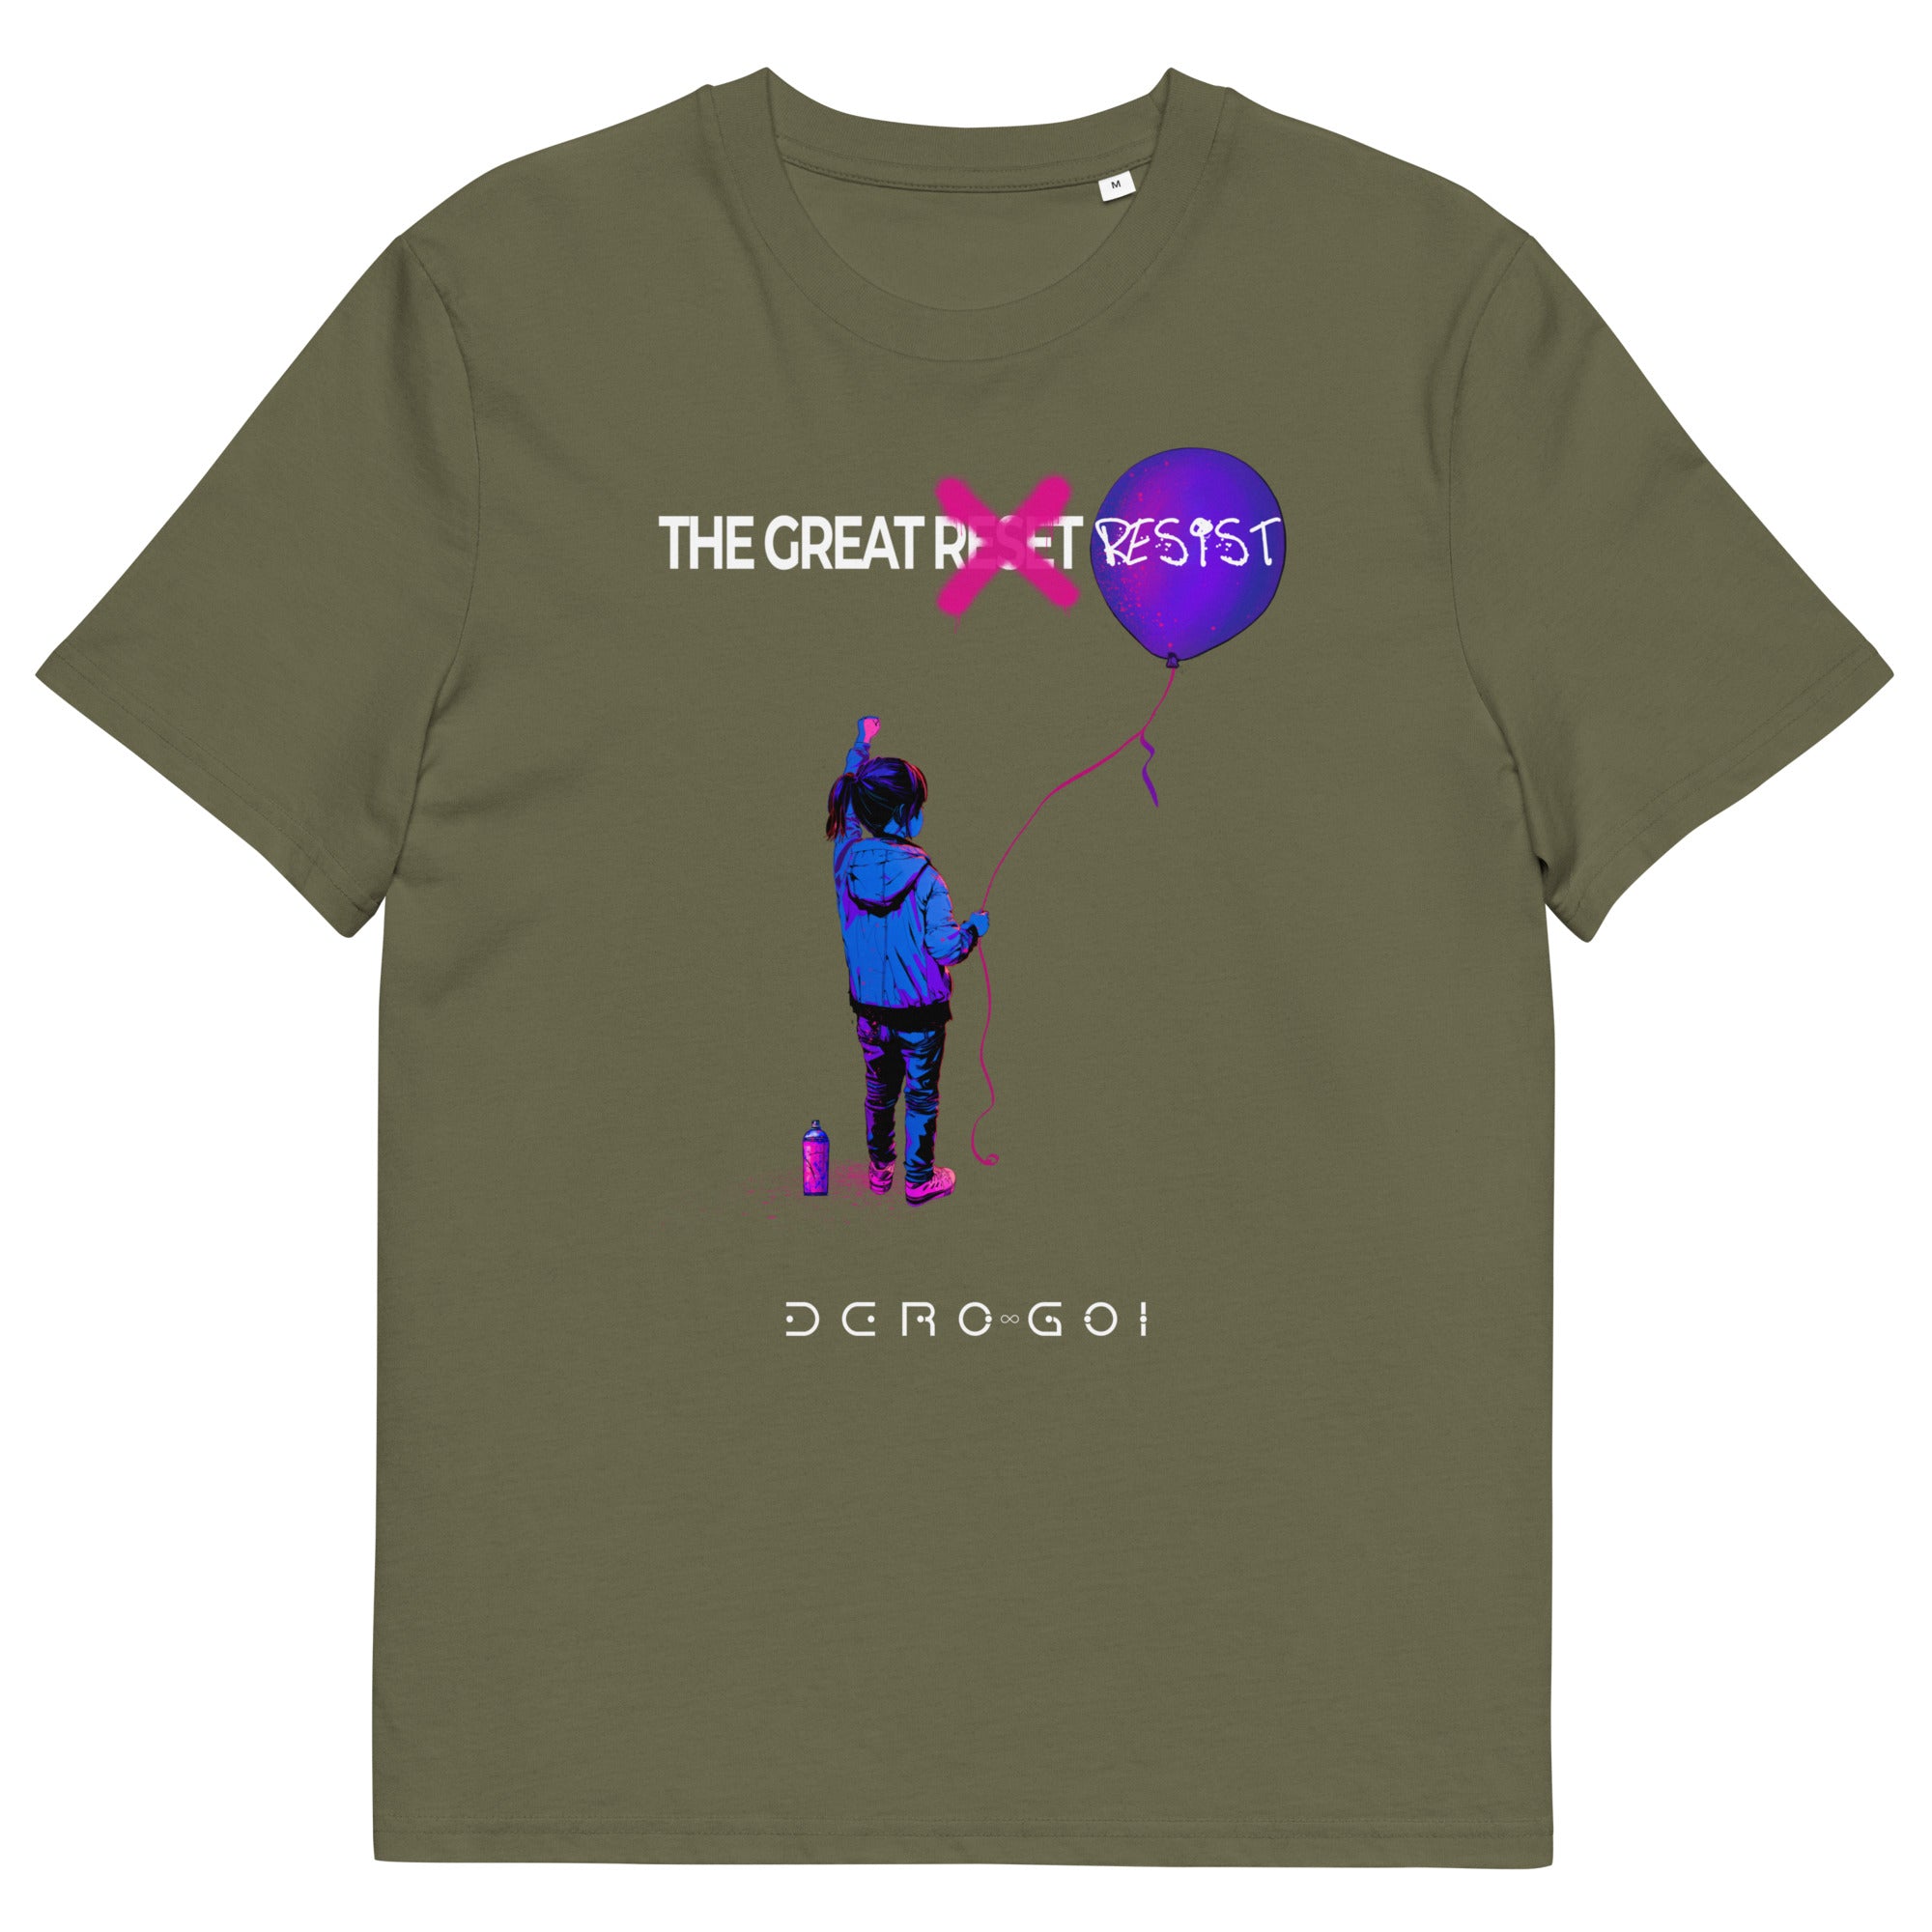 DERO GOI - The Great Reset - Unisex Organic Cotton T-shirt